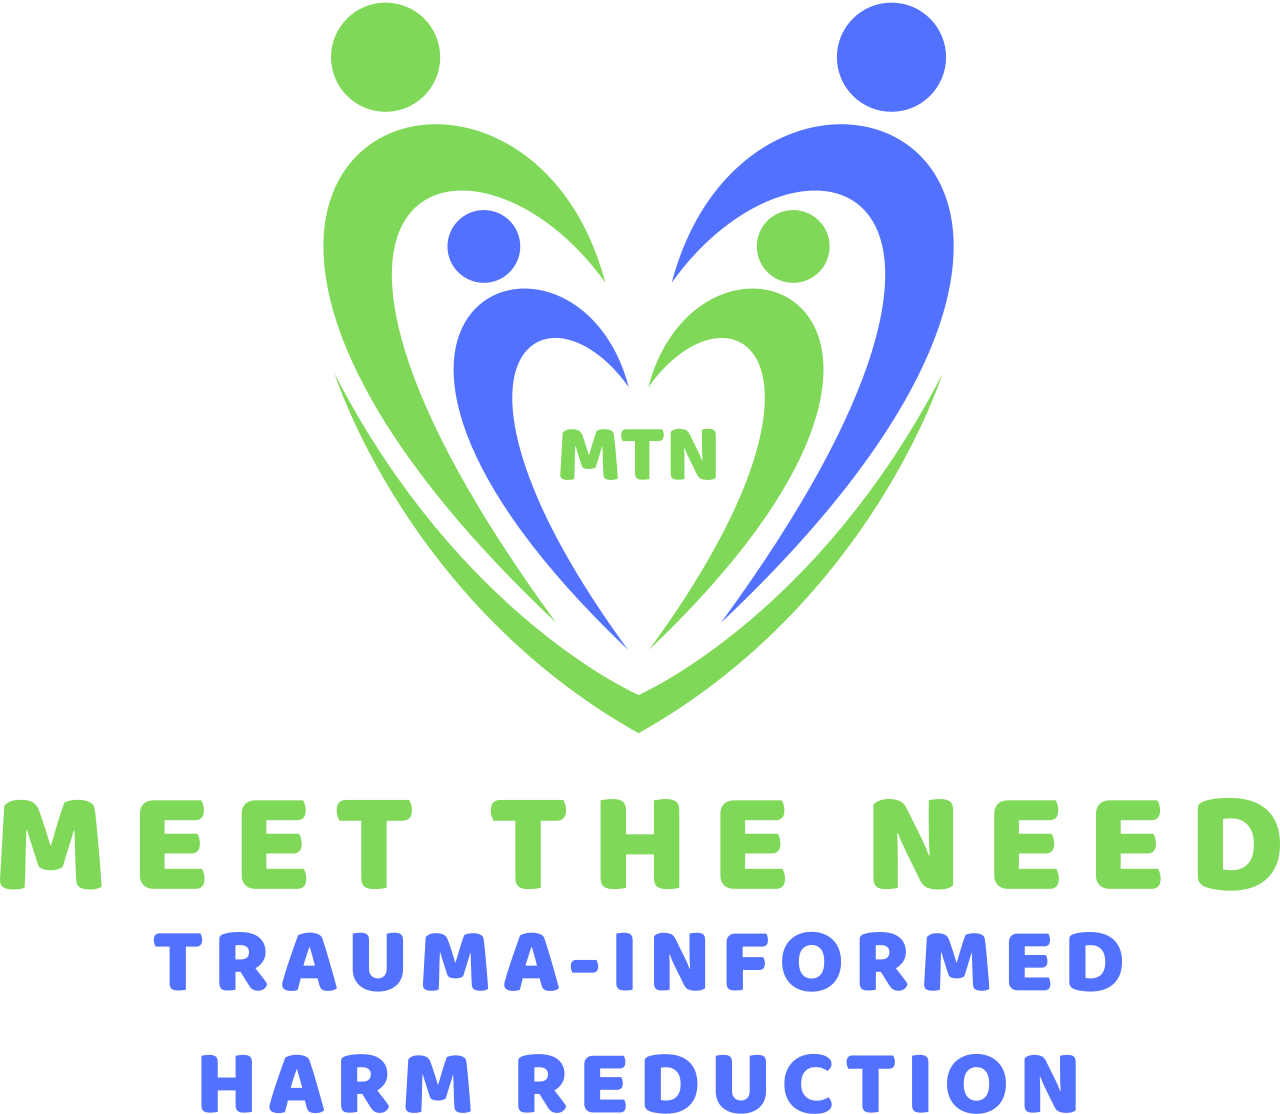 Meet The Need's logo